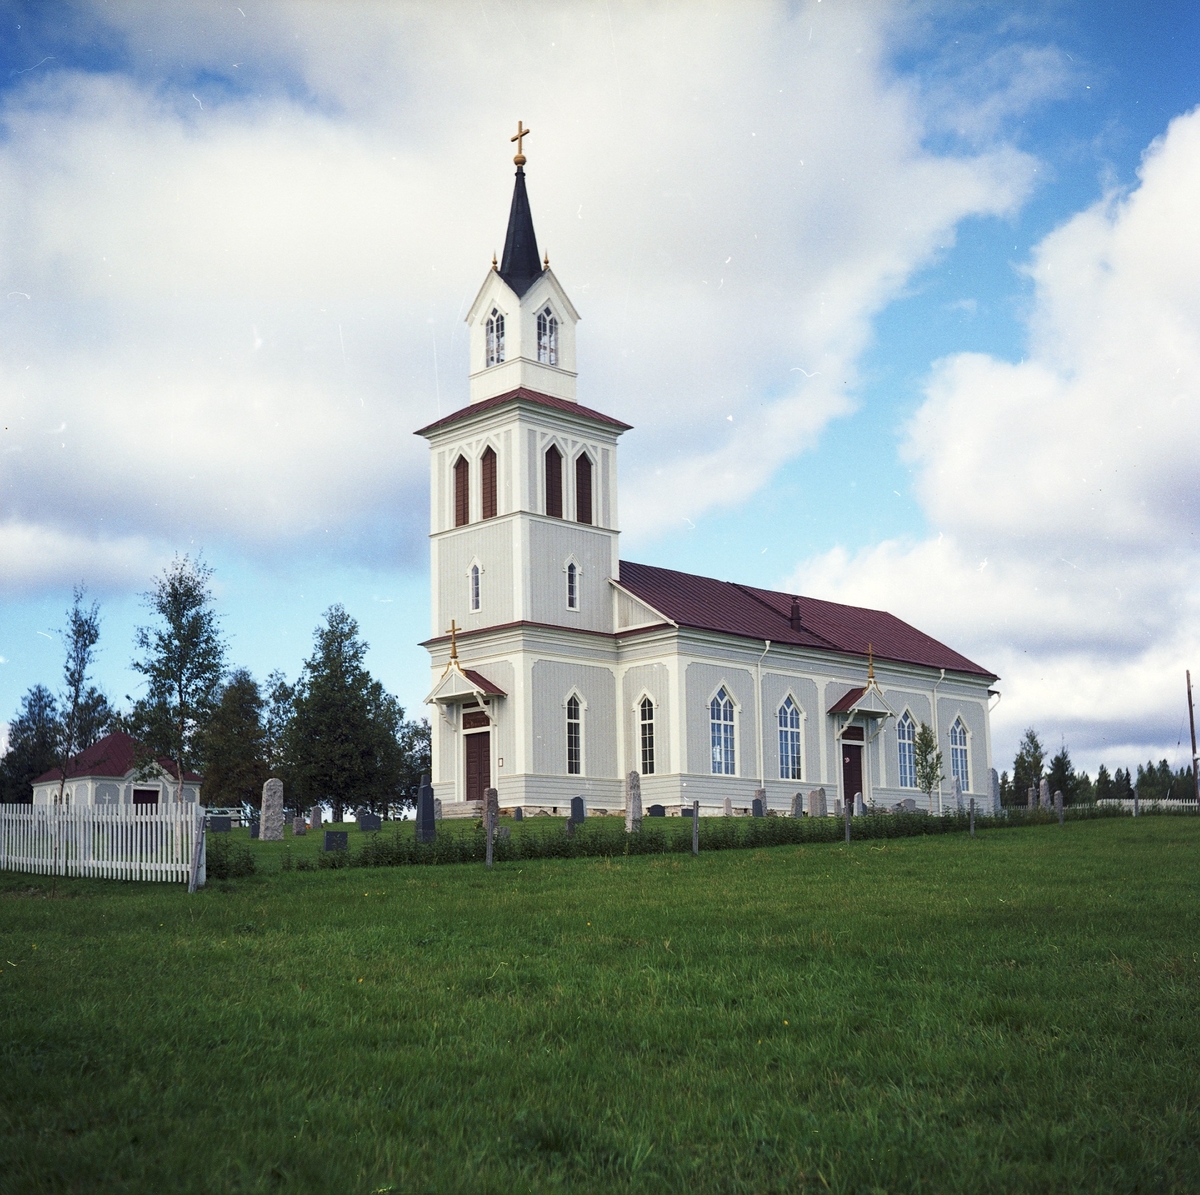 Åsarne kyrka